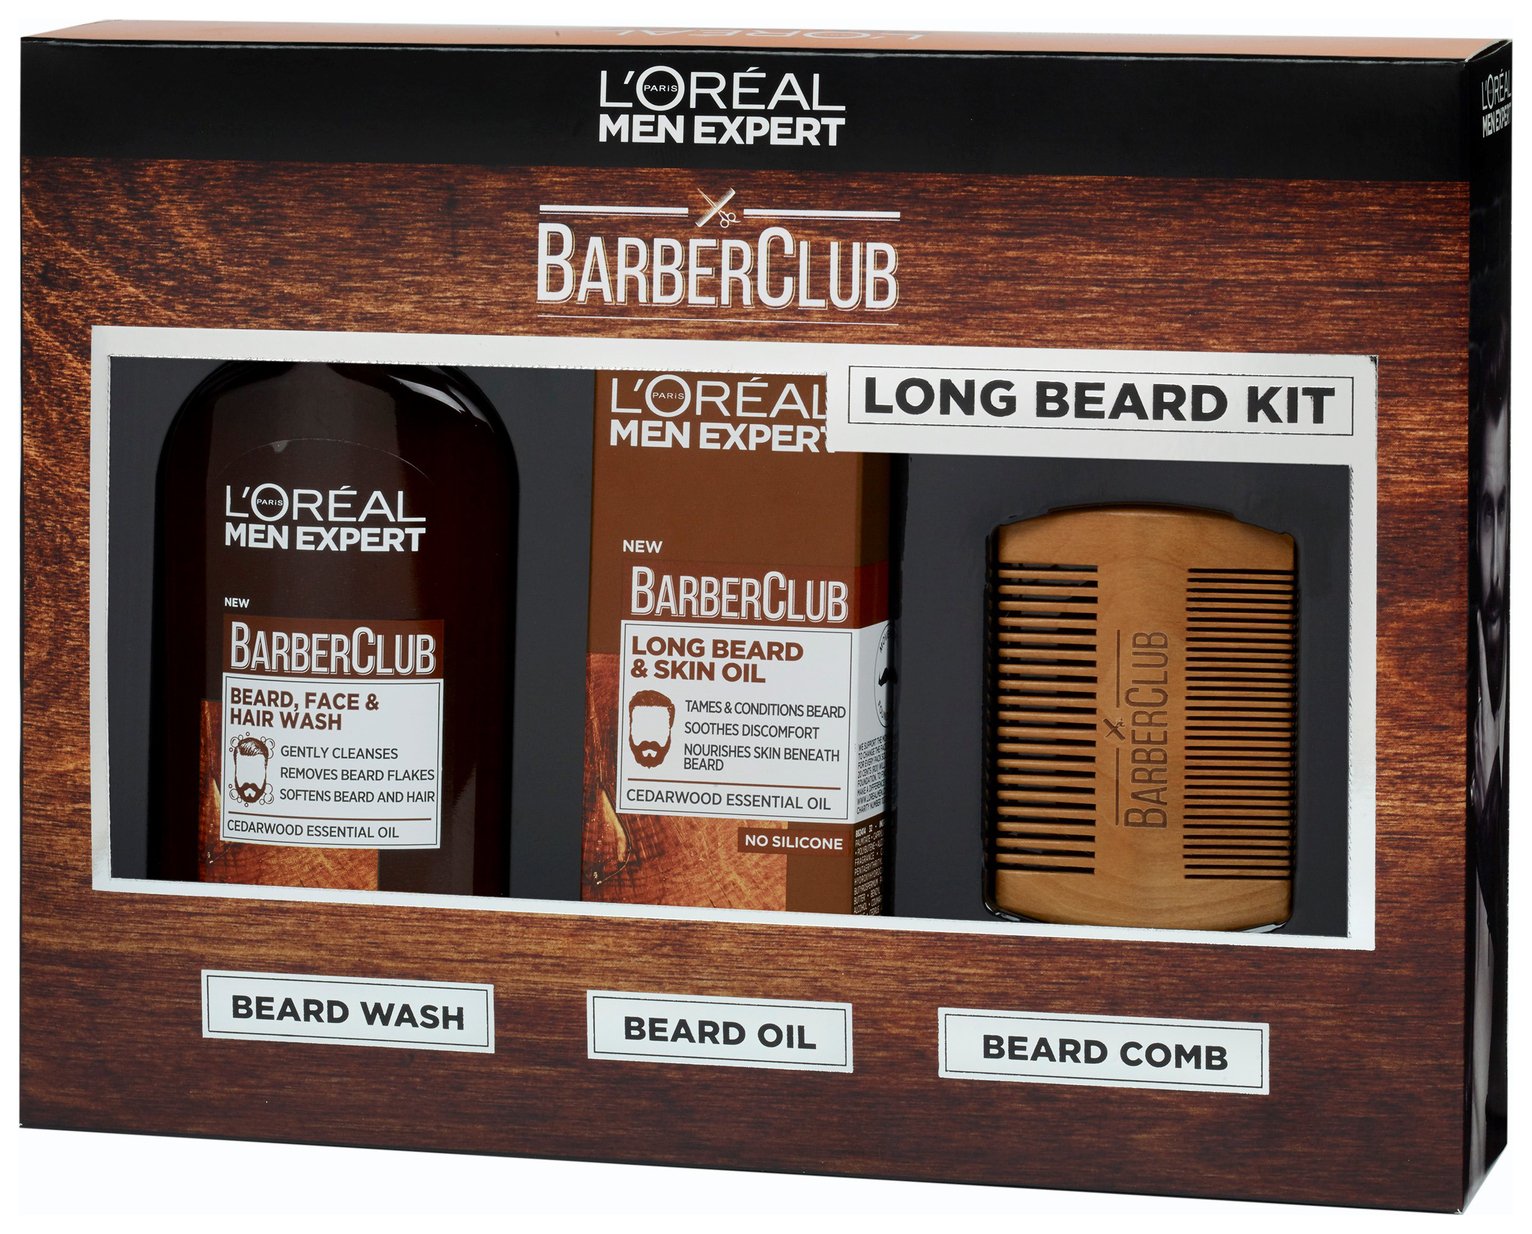 L'Oreal Barber Club Long Beard Gift Set review